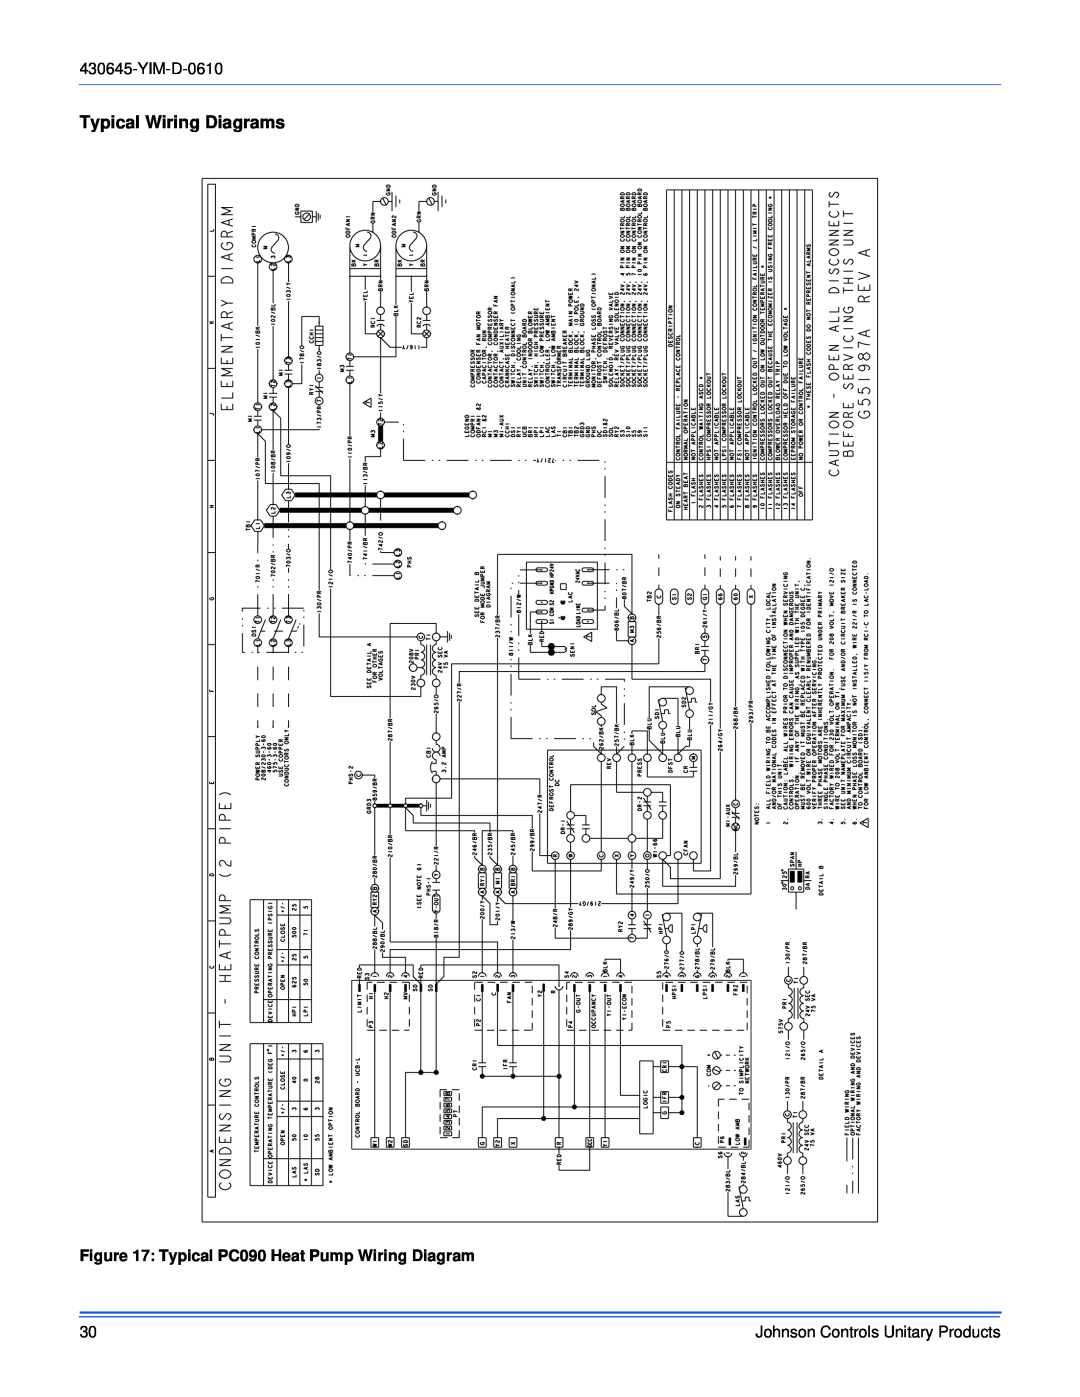 Johnson Controls PD 180 THRU 240, PC090 THRU 240 dimensions Typical Wiring Diagrams, Typical PC090 Heat Pump Wiring Diagram 